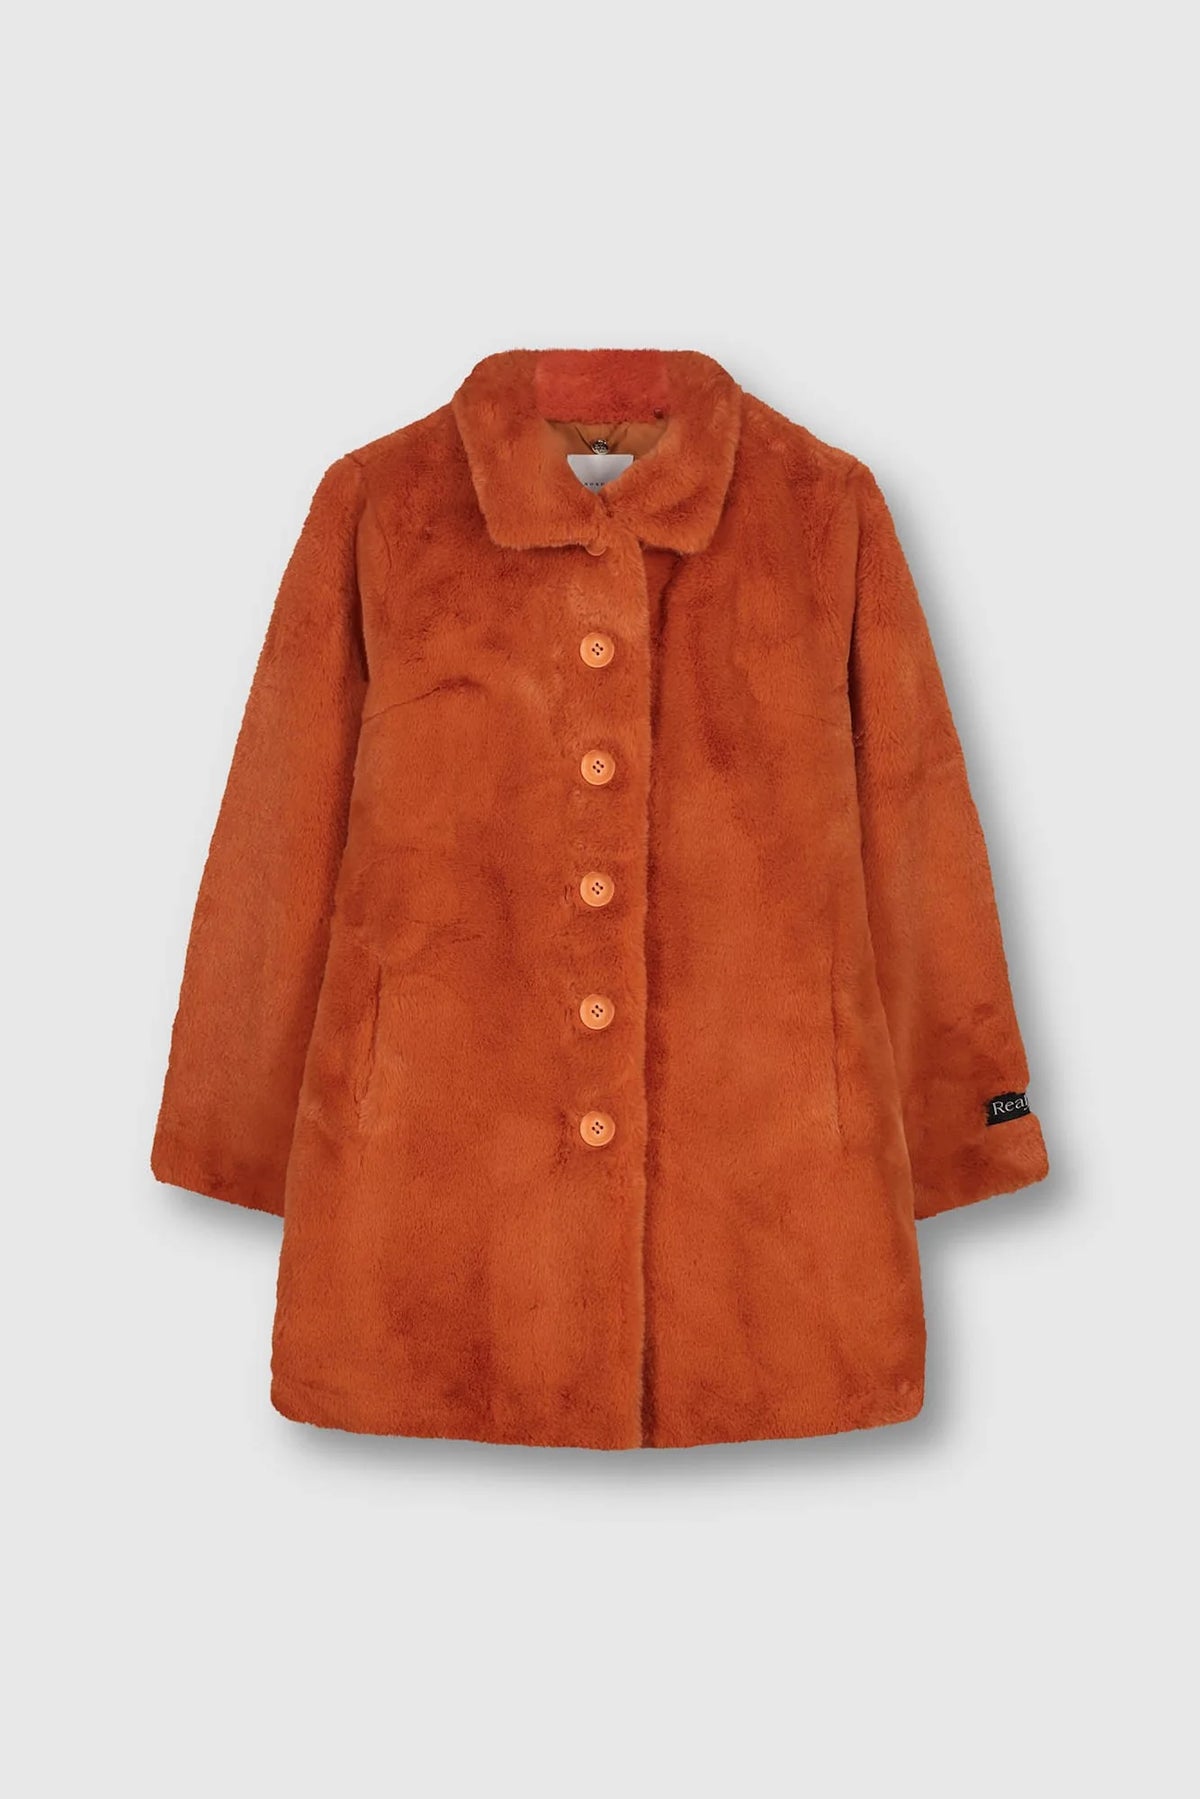 Terracotta orange faux fur medium length coat 